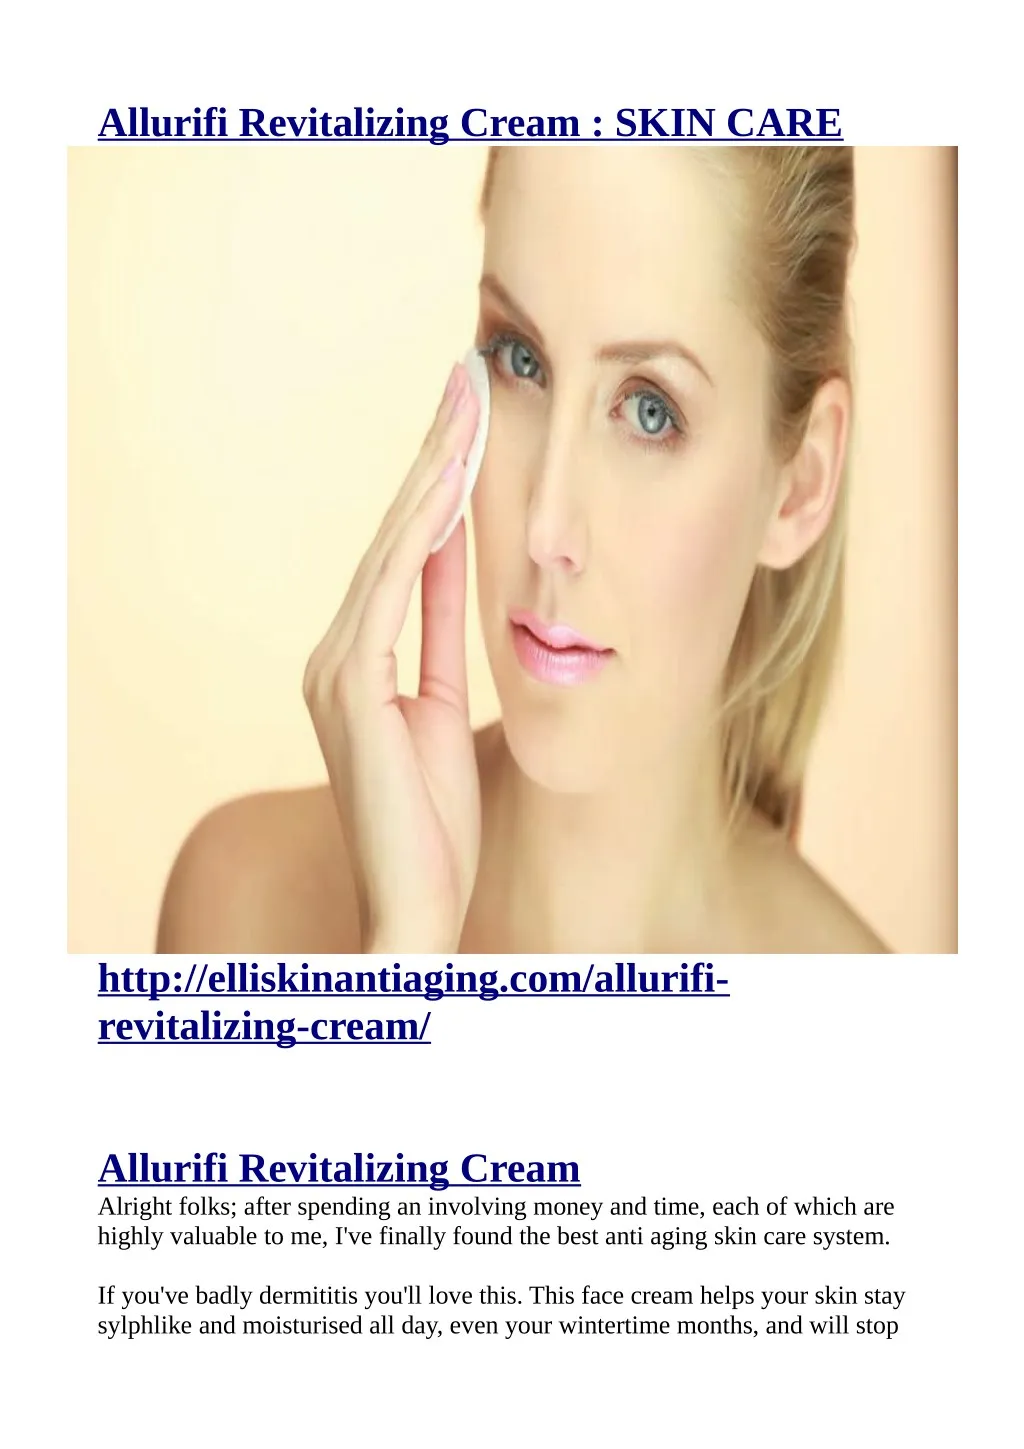 allurifi revitalizing cream skin care